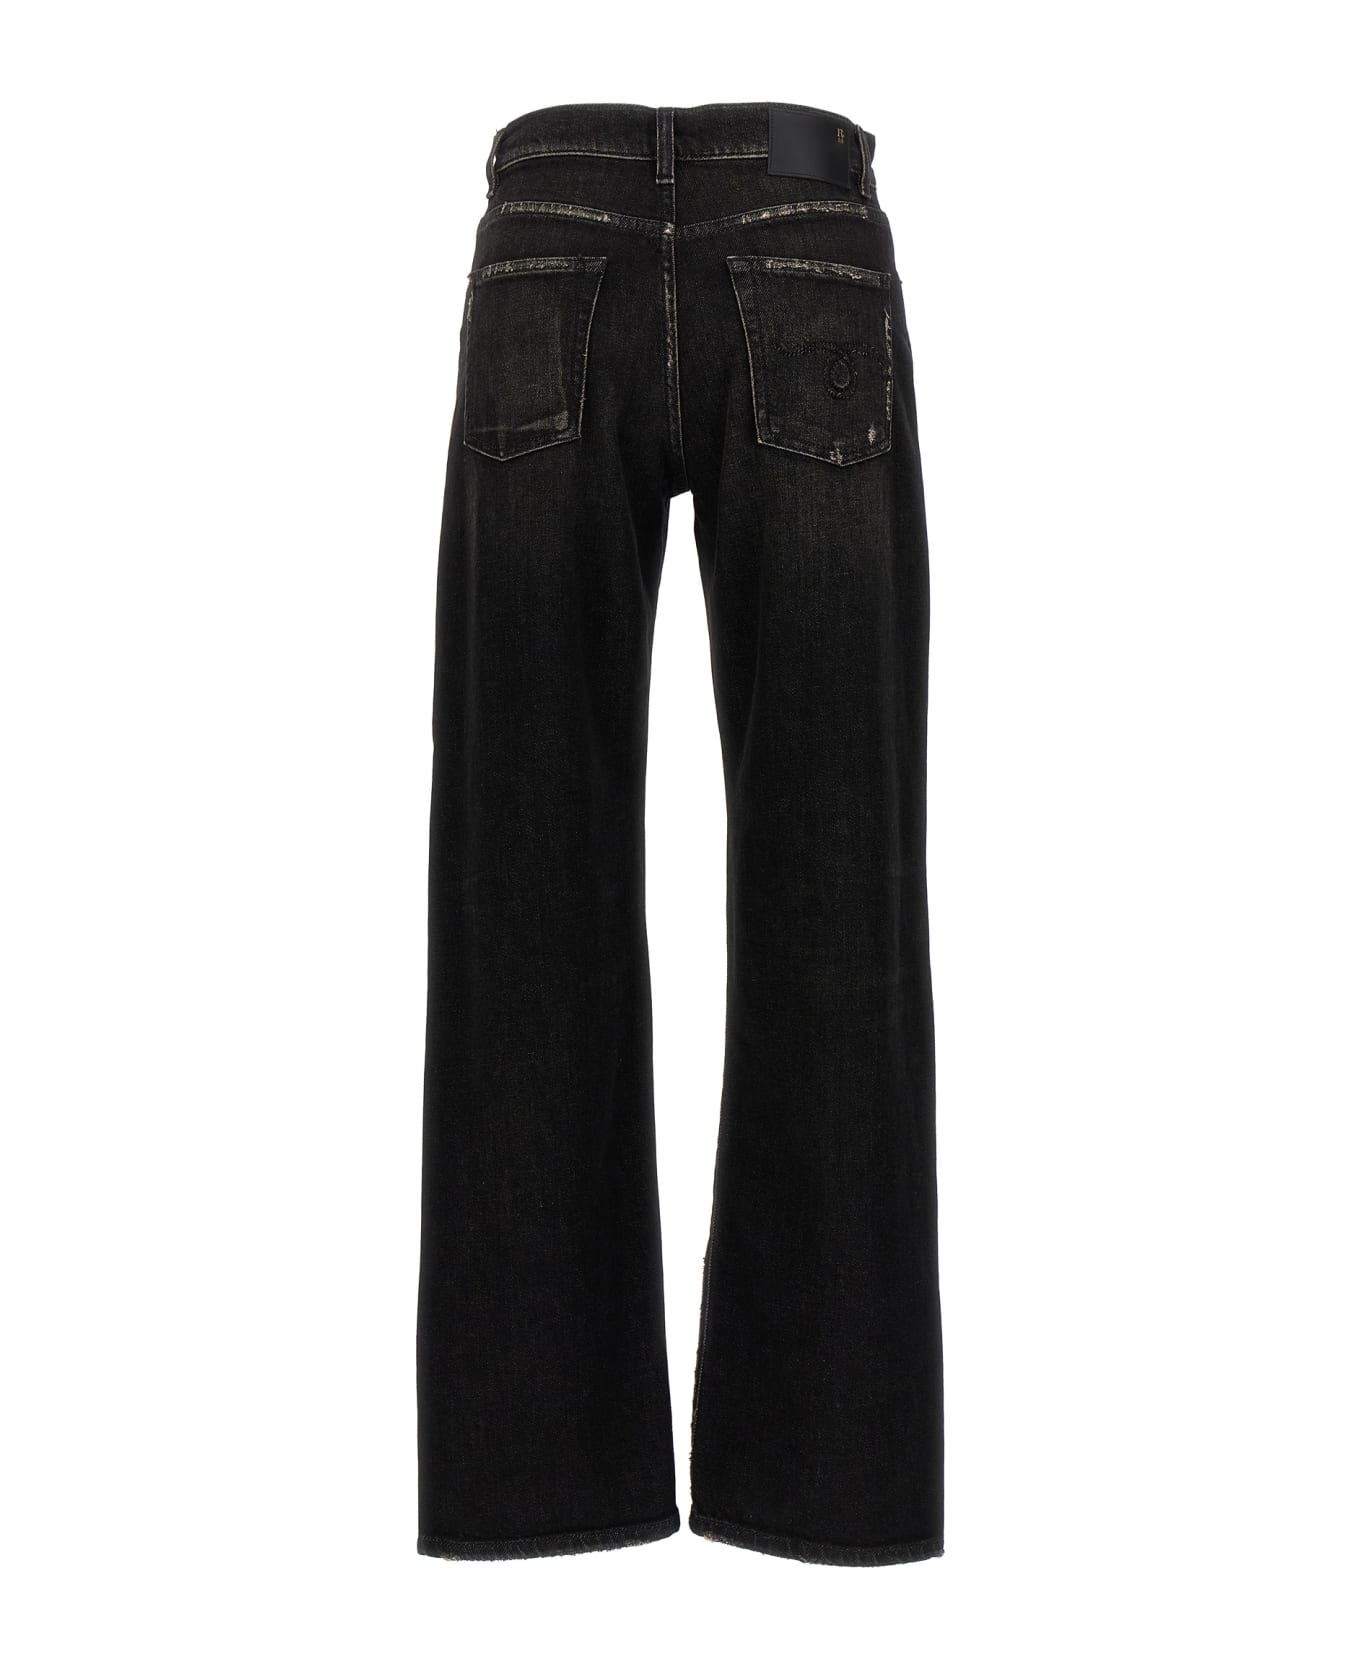 R13 'alice' Jeans - Black   デニム